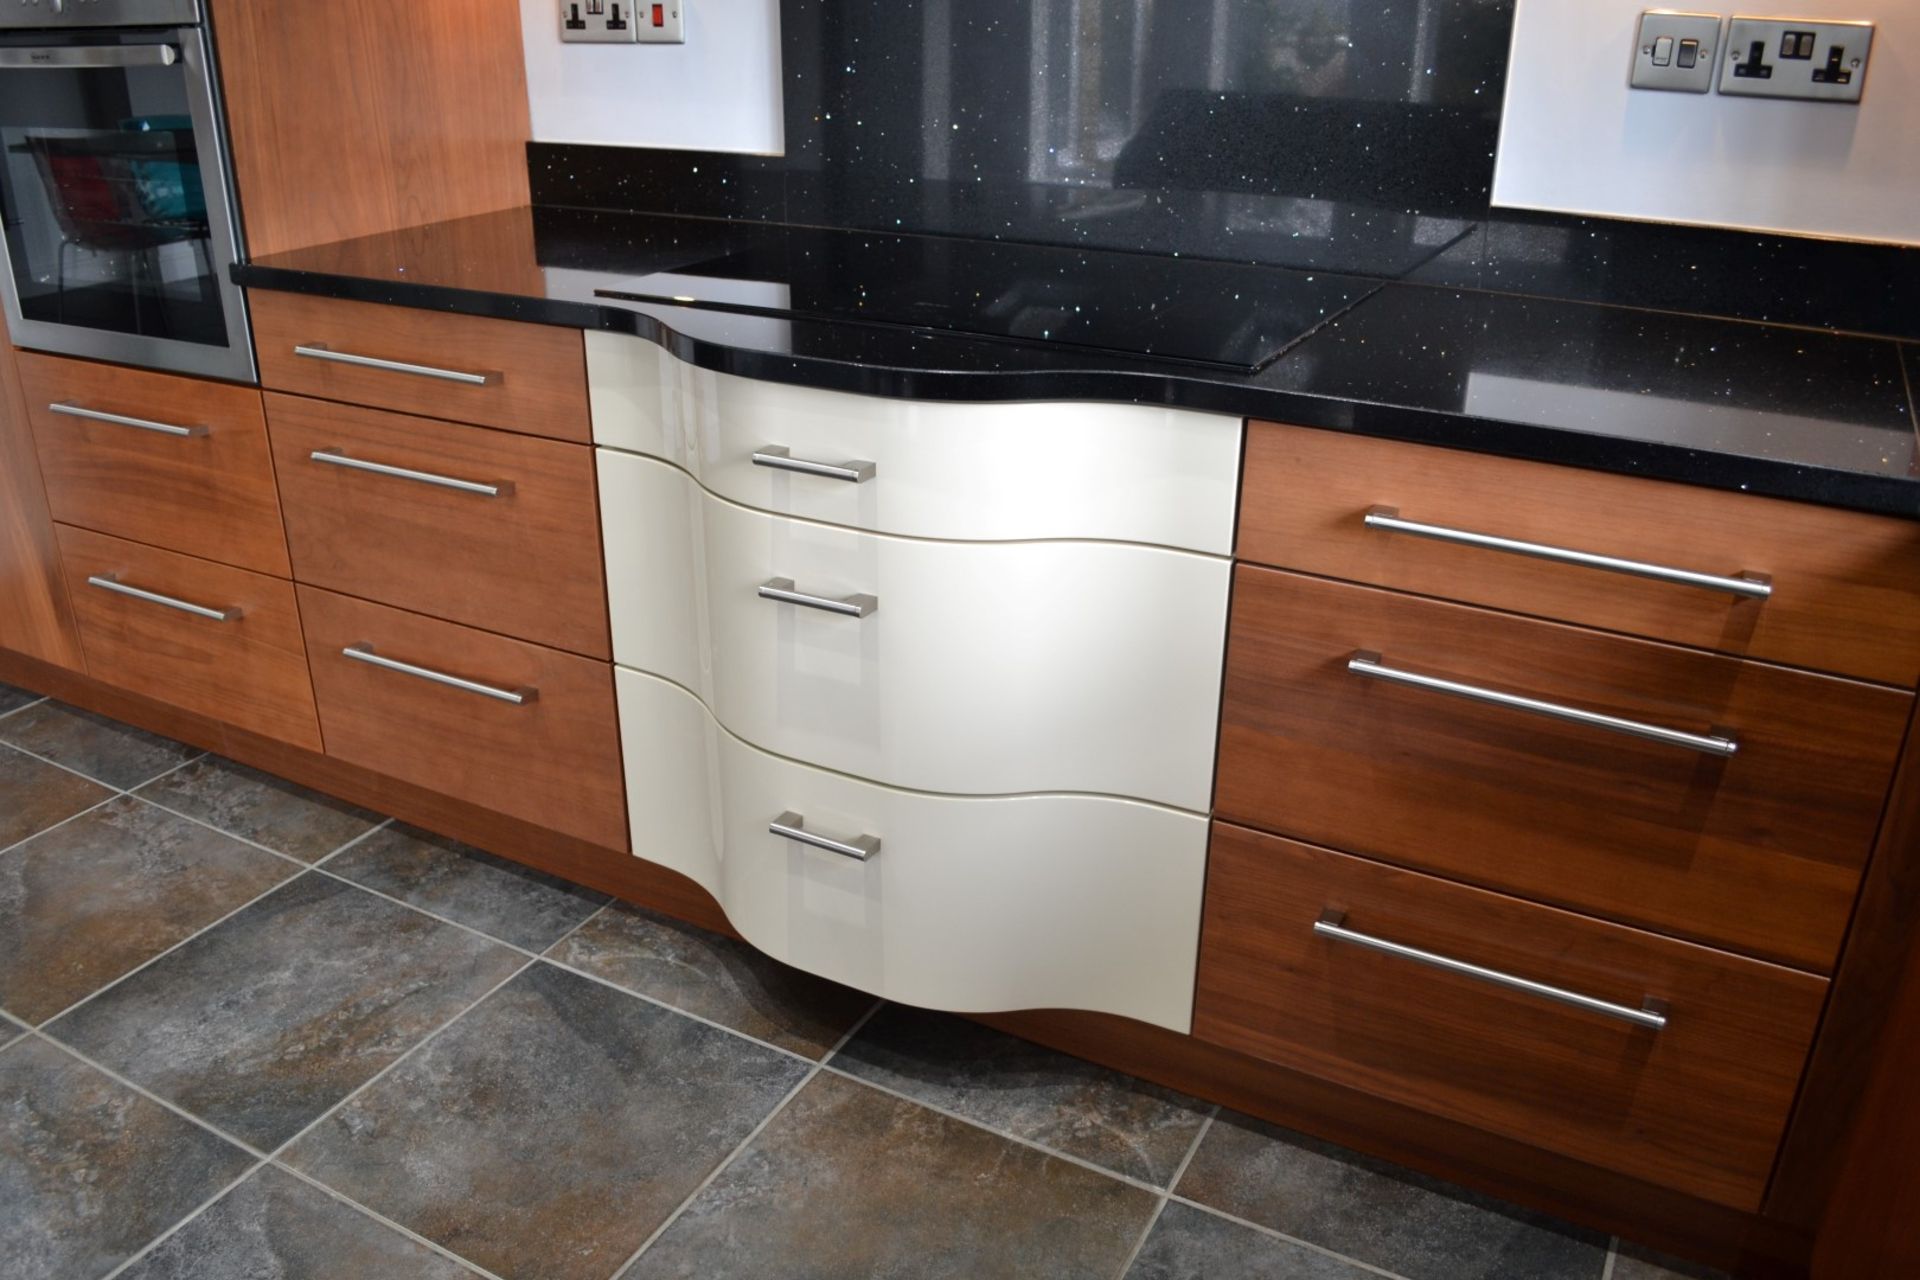 1 x Kitchen Design Bespoke Fitted Kitchen With Silestone Worktops & Neff Appliances - Superb - Image 32 of 59